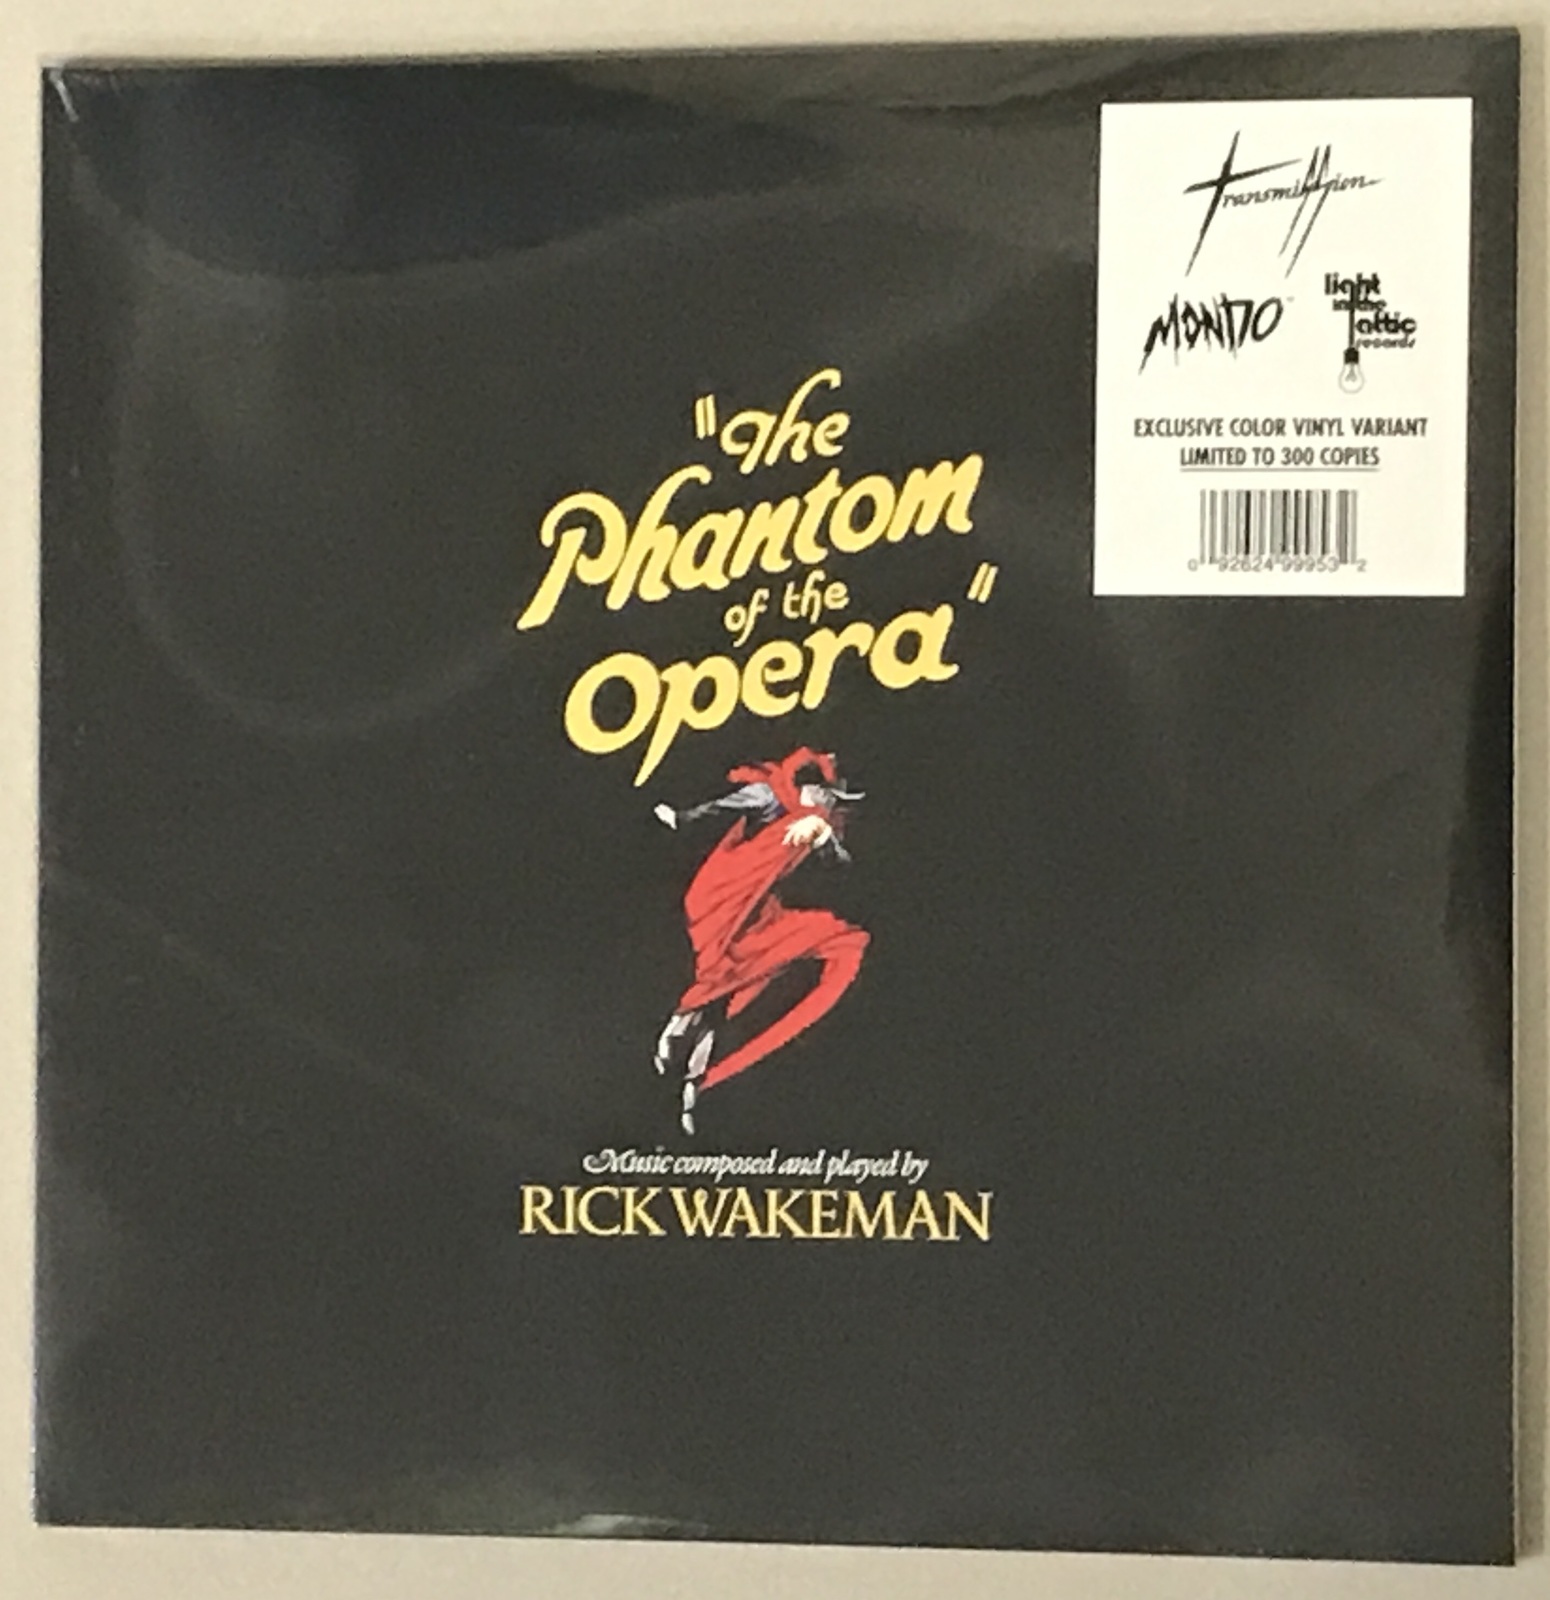 phantom of the opera movie soundtrack vinyl